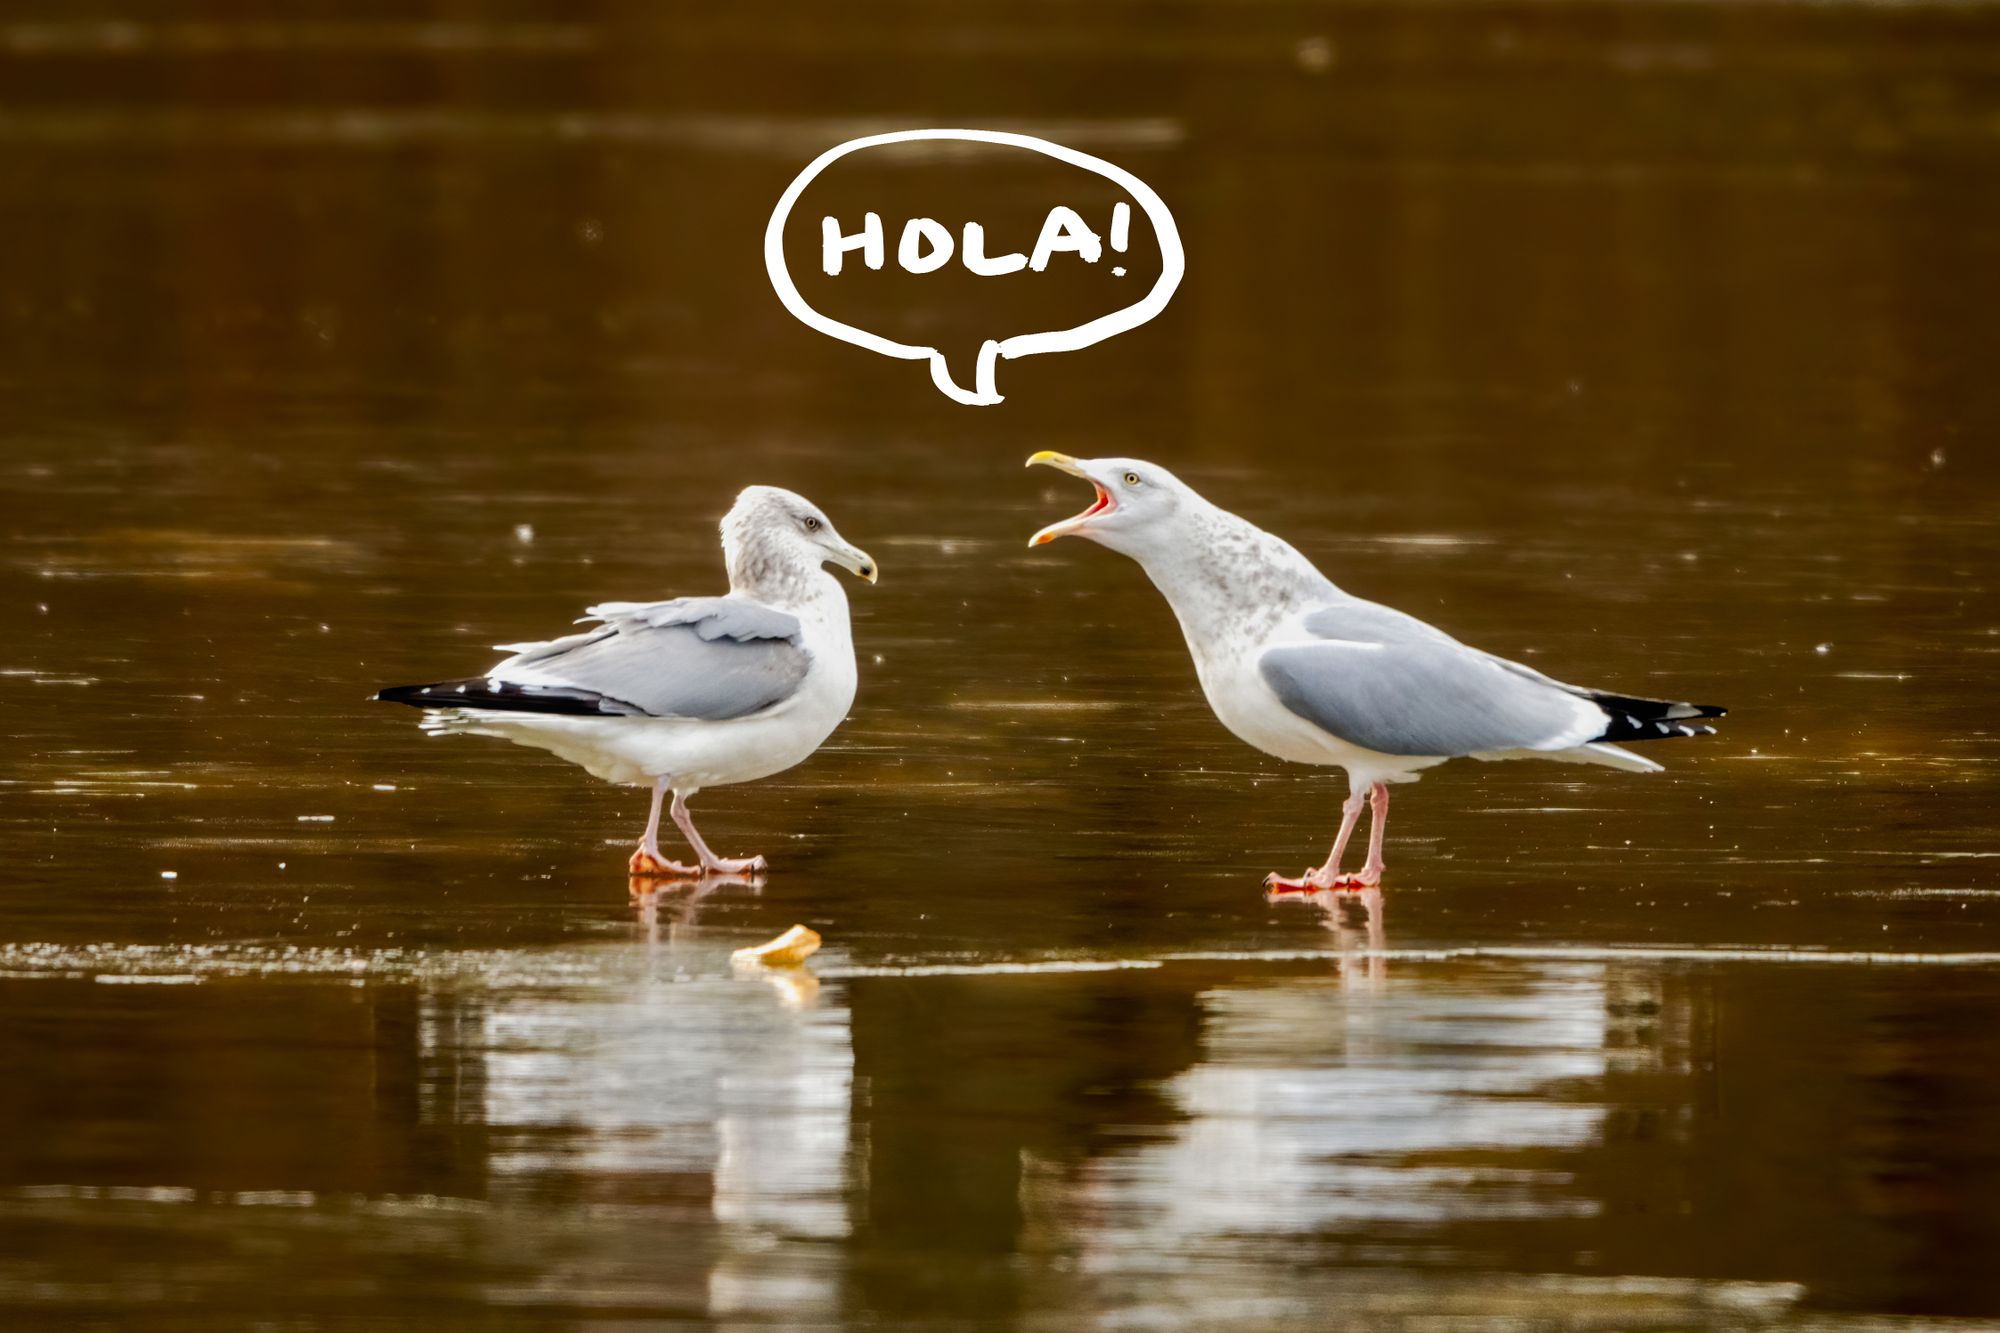 Two birds speaking Spanish